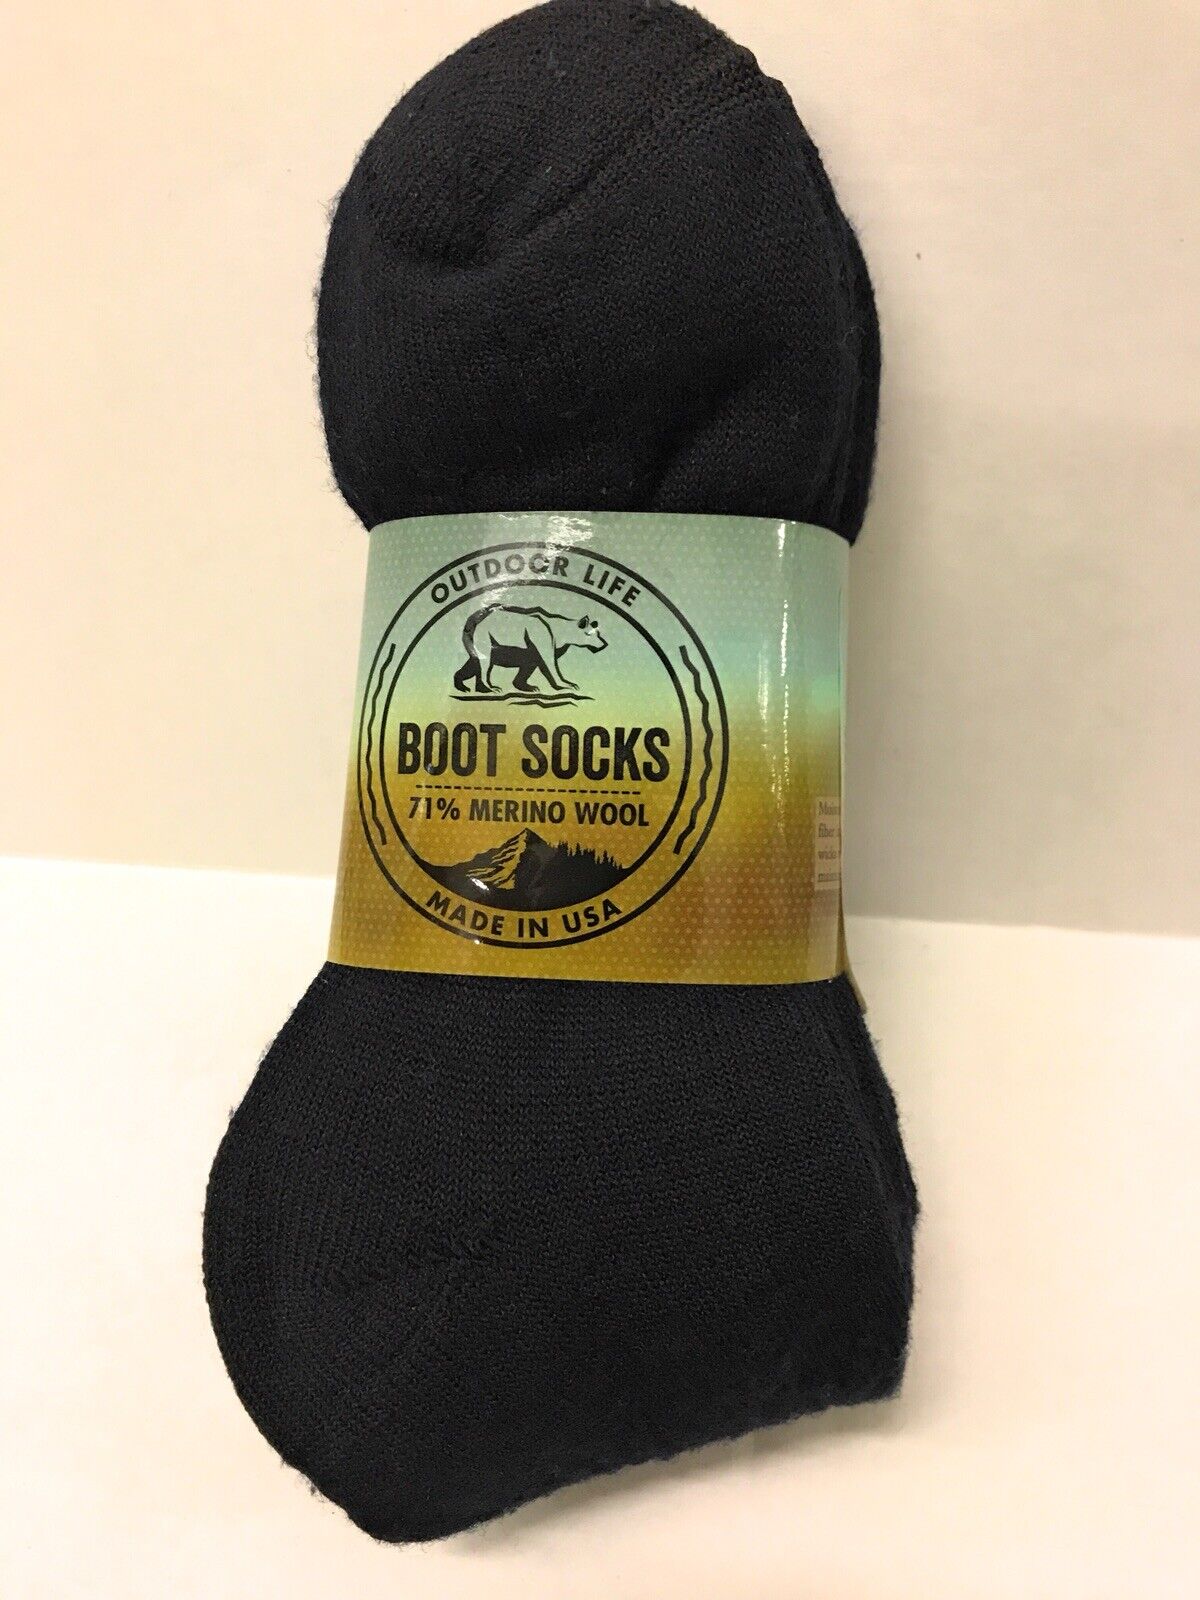 Wholesale Men's Thermal Socks - 3 Pack, Black, 10-13